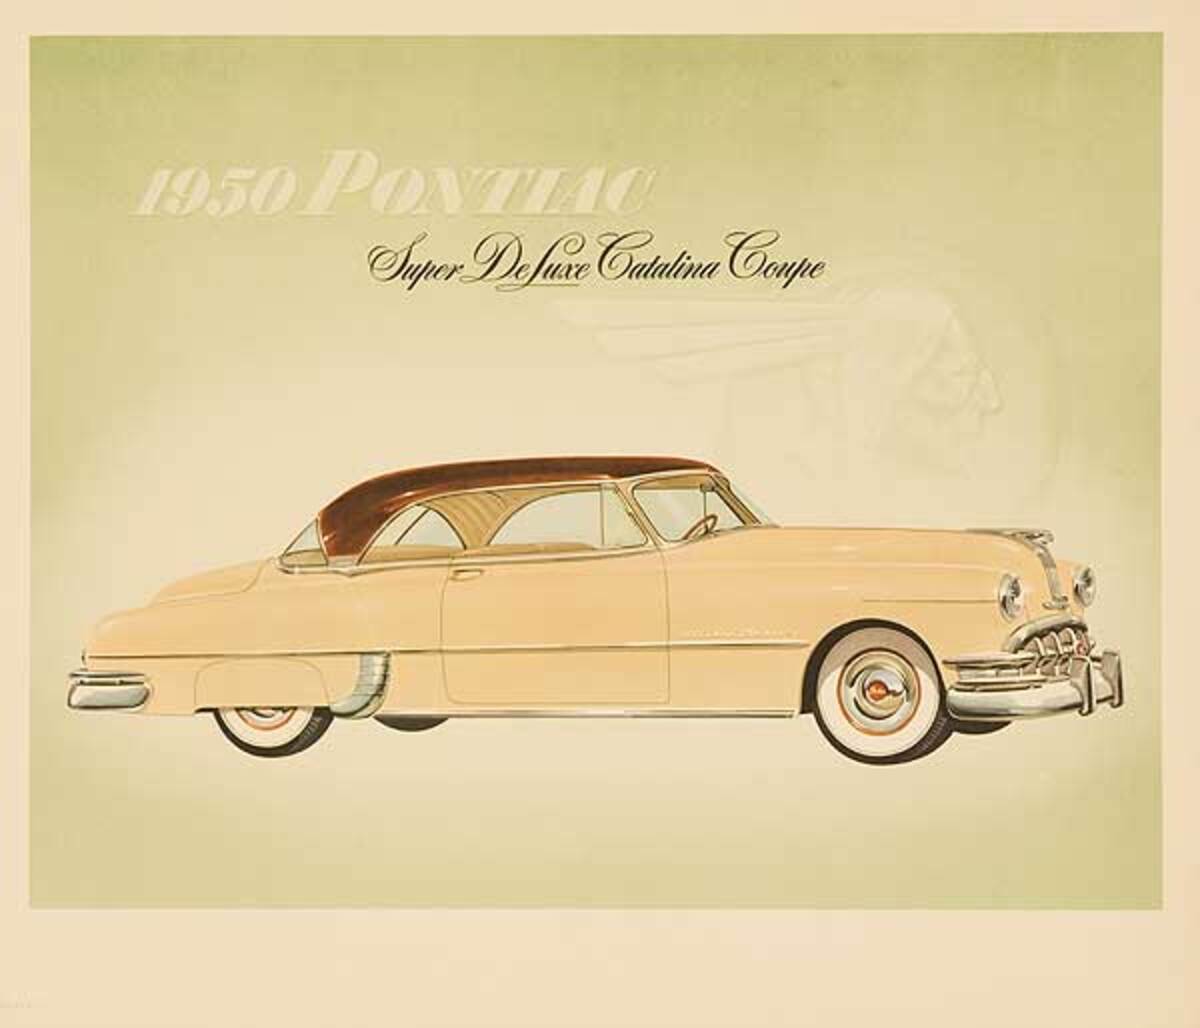 1950 Pontiac Super Deluxe Catalina Coupe Original Showroom Advertising Poster